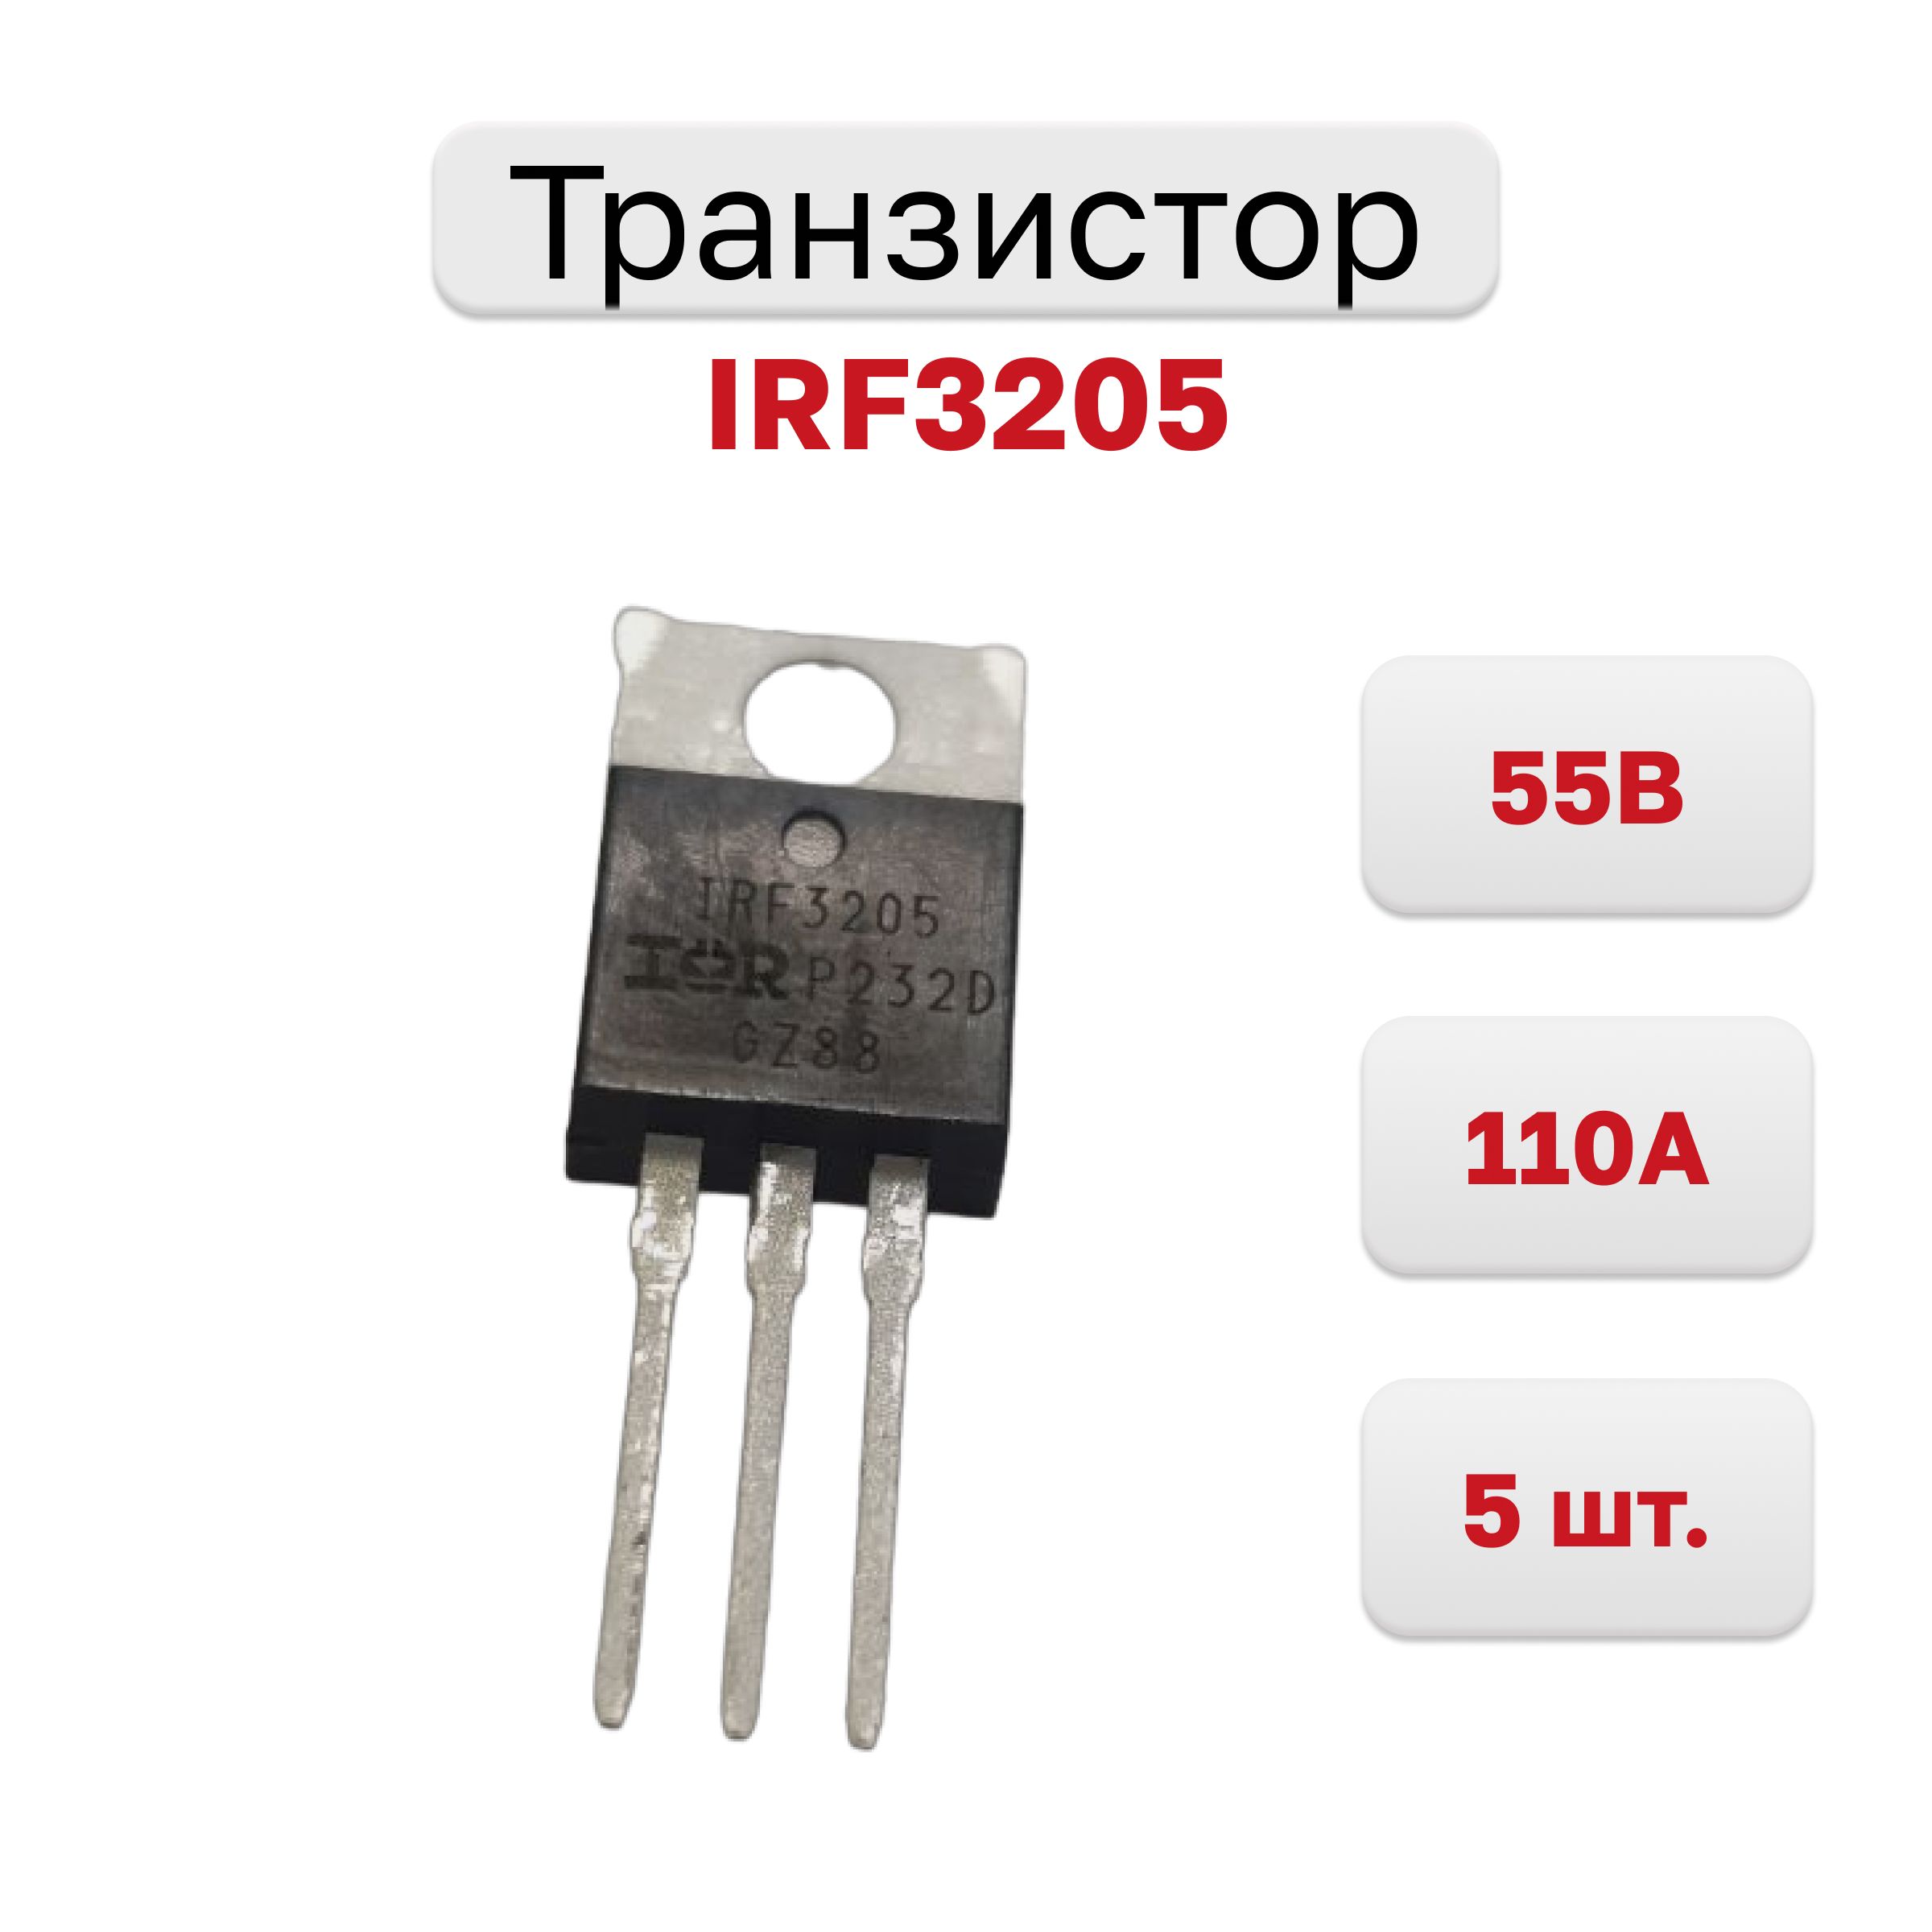 ТранзисторIRF3205,N-канал55В110АTO-220AB,5шт.